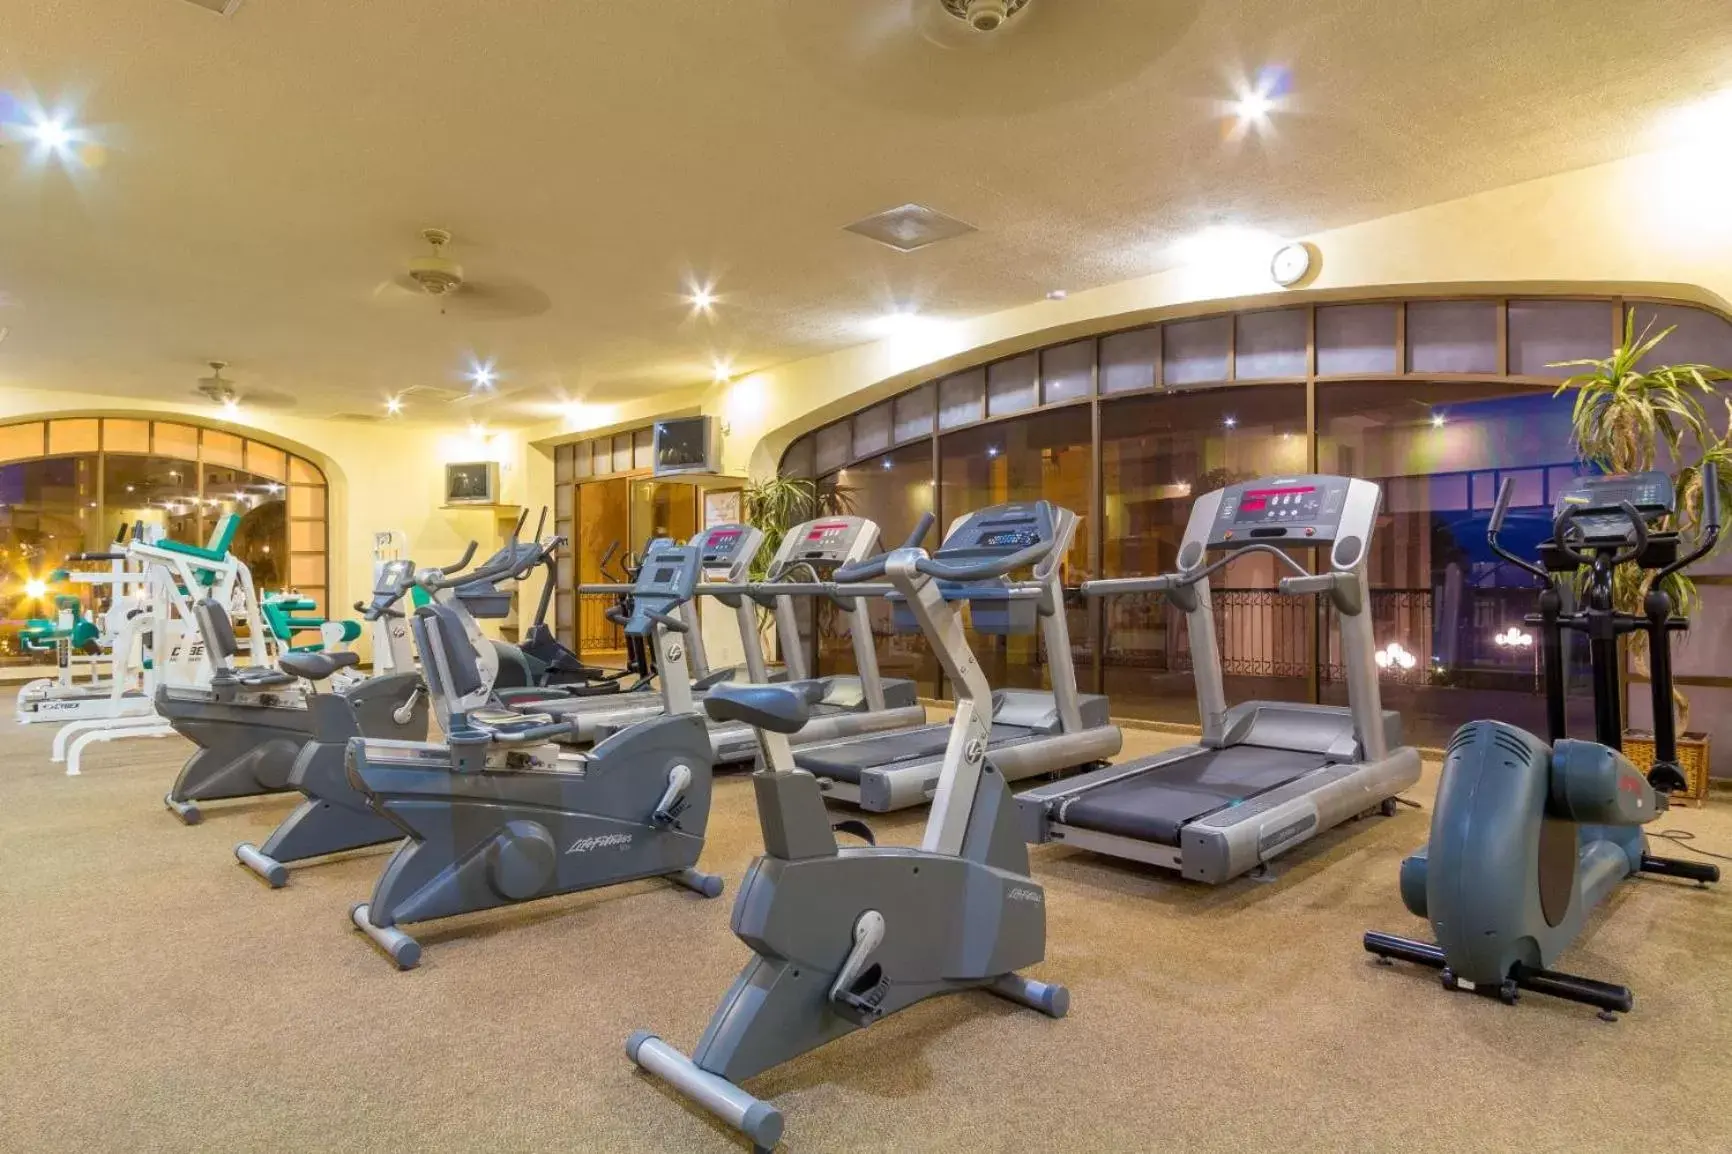 Fitness centre/facilities, Fitness Center/Facilities in Sonoran Sea 310-W - Modern 1 bedroom